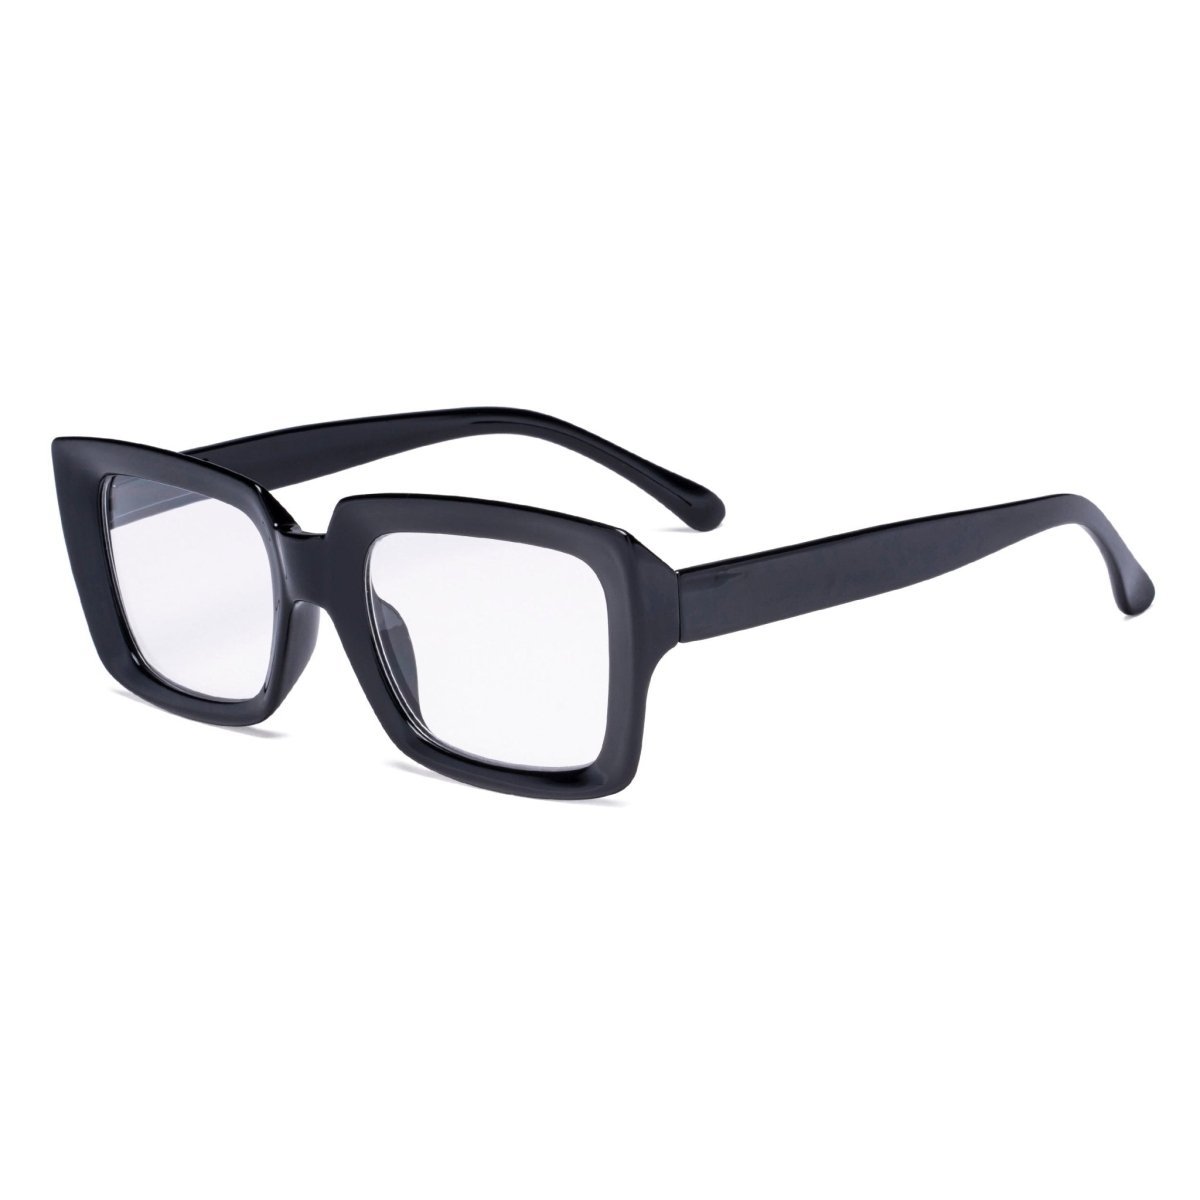 Stylish Reading Glasses Thicker Frame Design Readers R9107 - 1eyekeeper.com